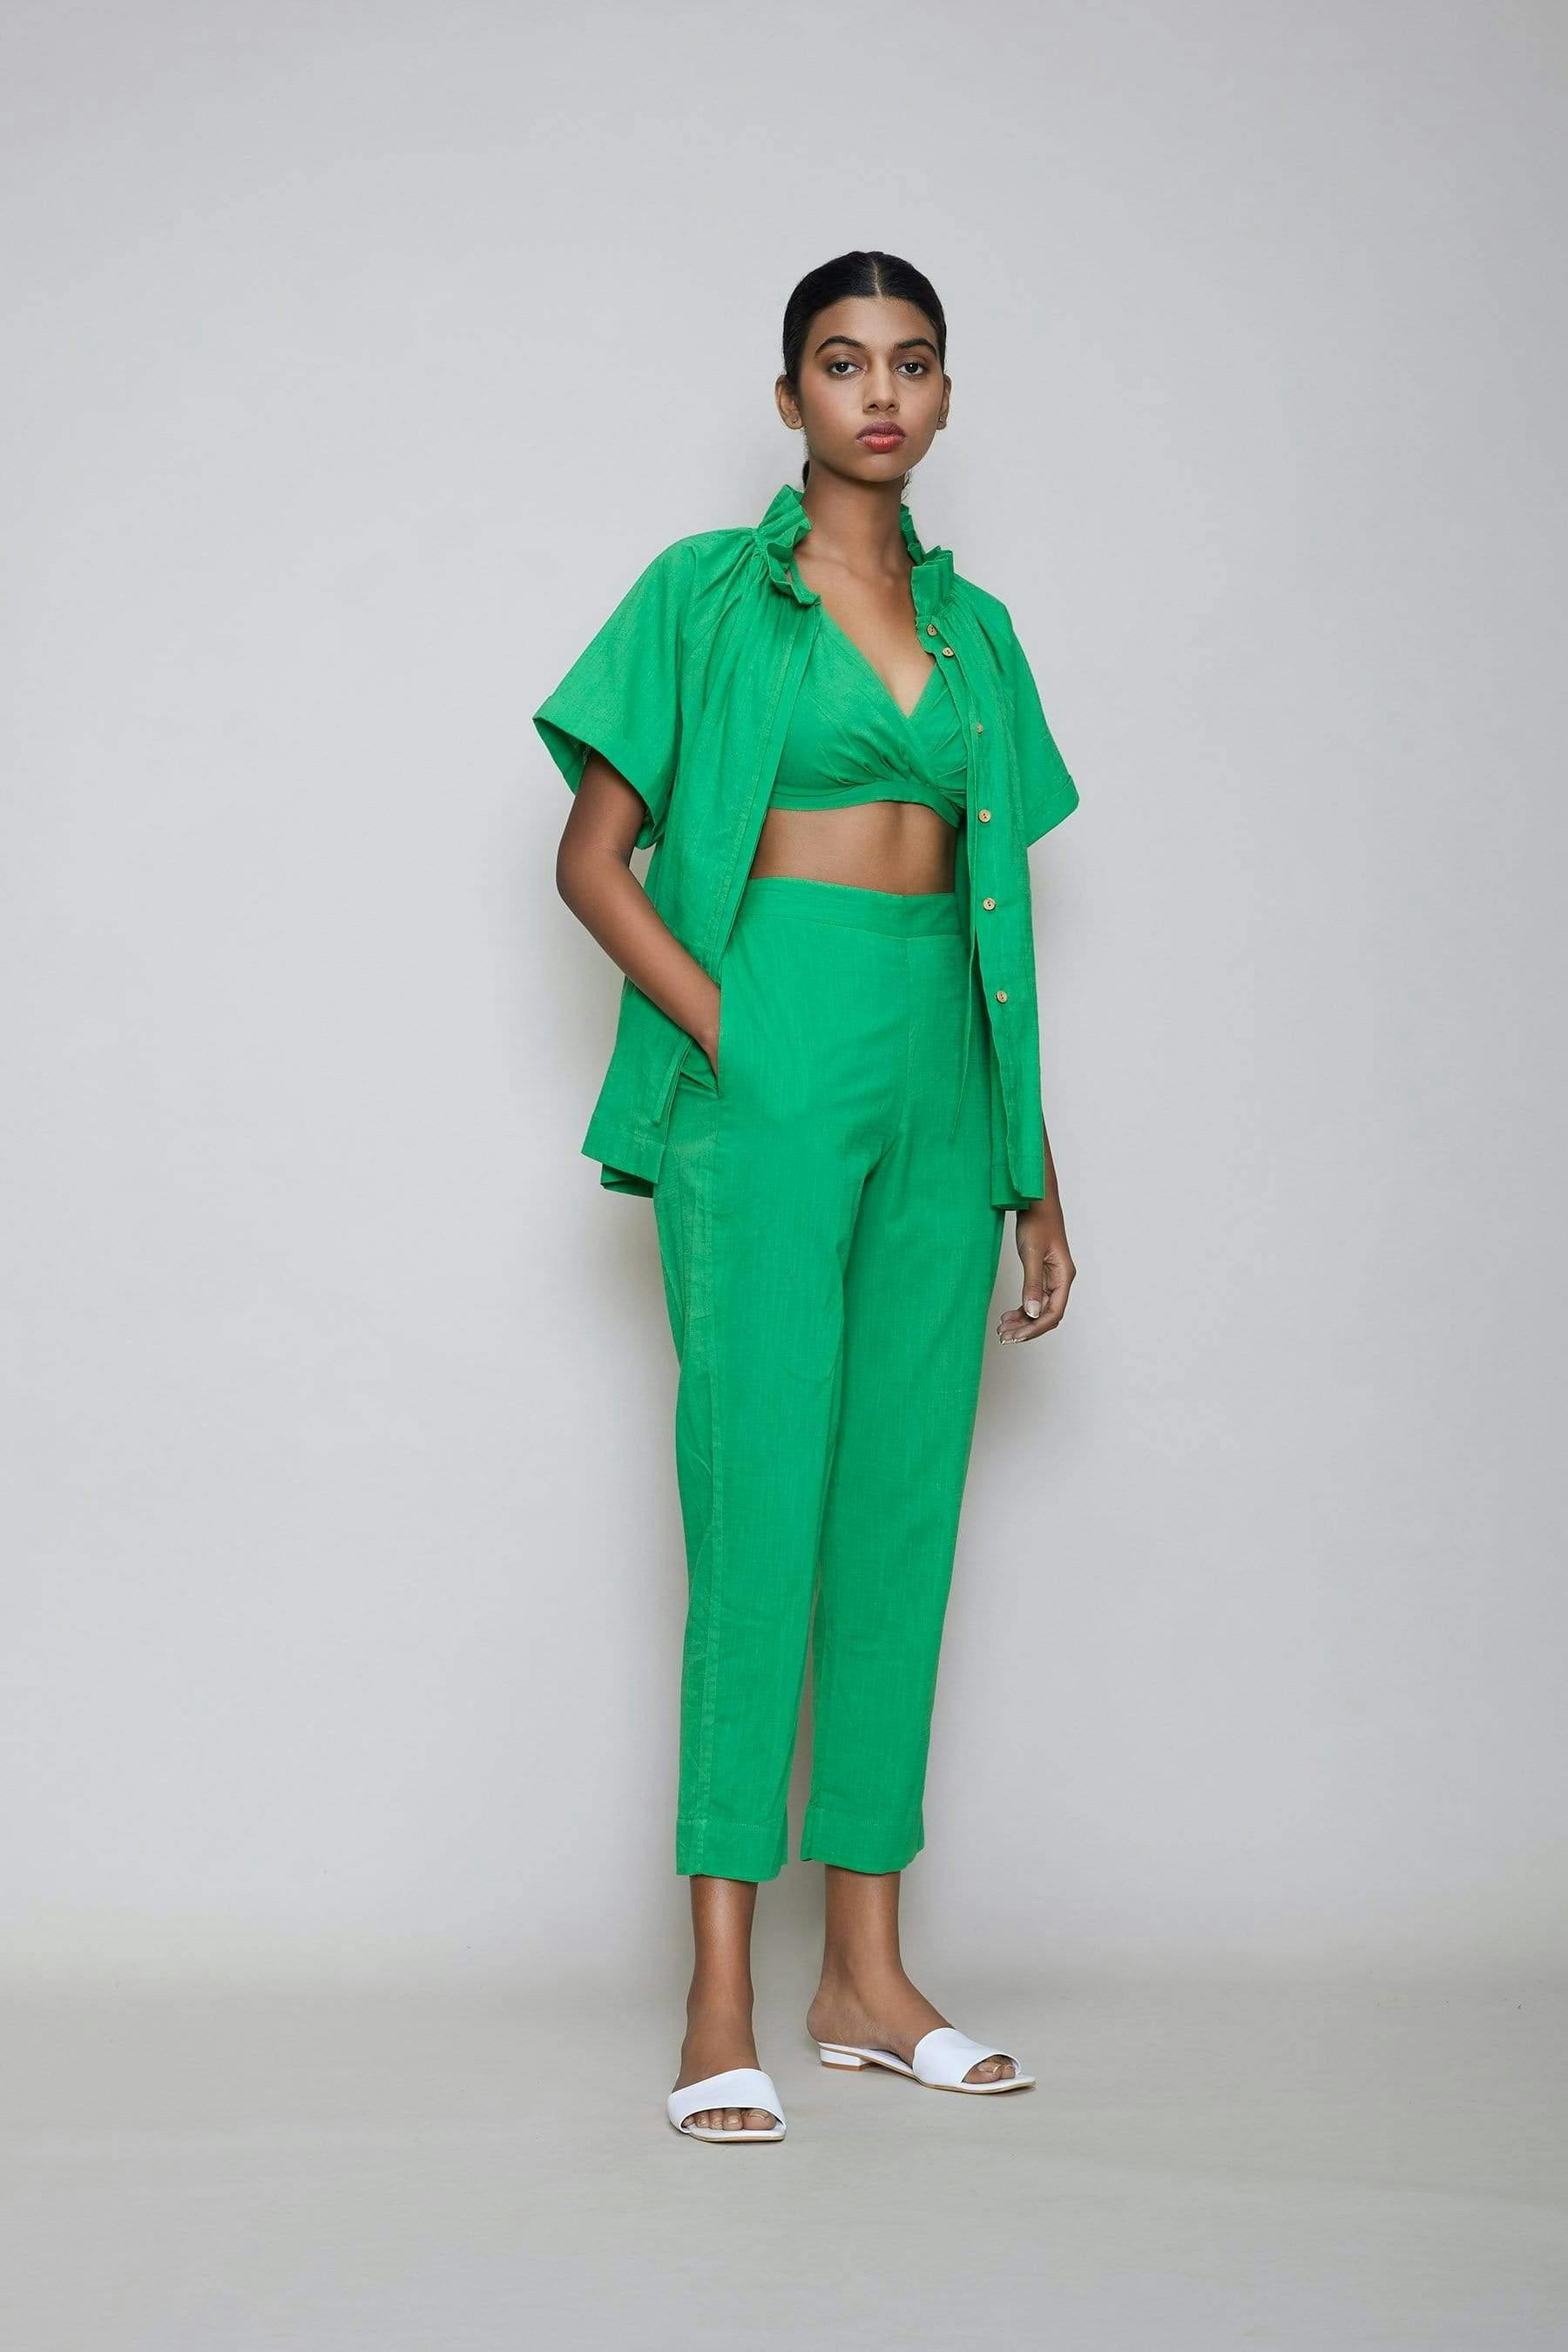 Mati Rang SE Pants - Green, a product by Style Mati